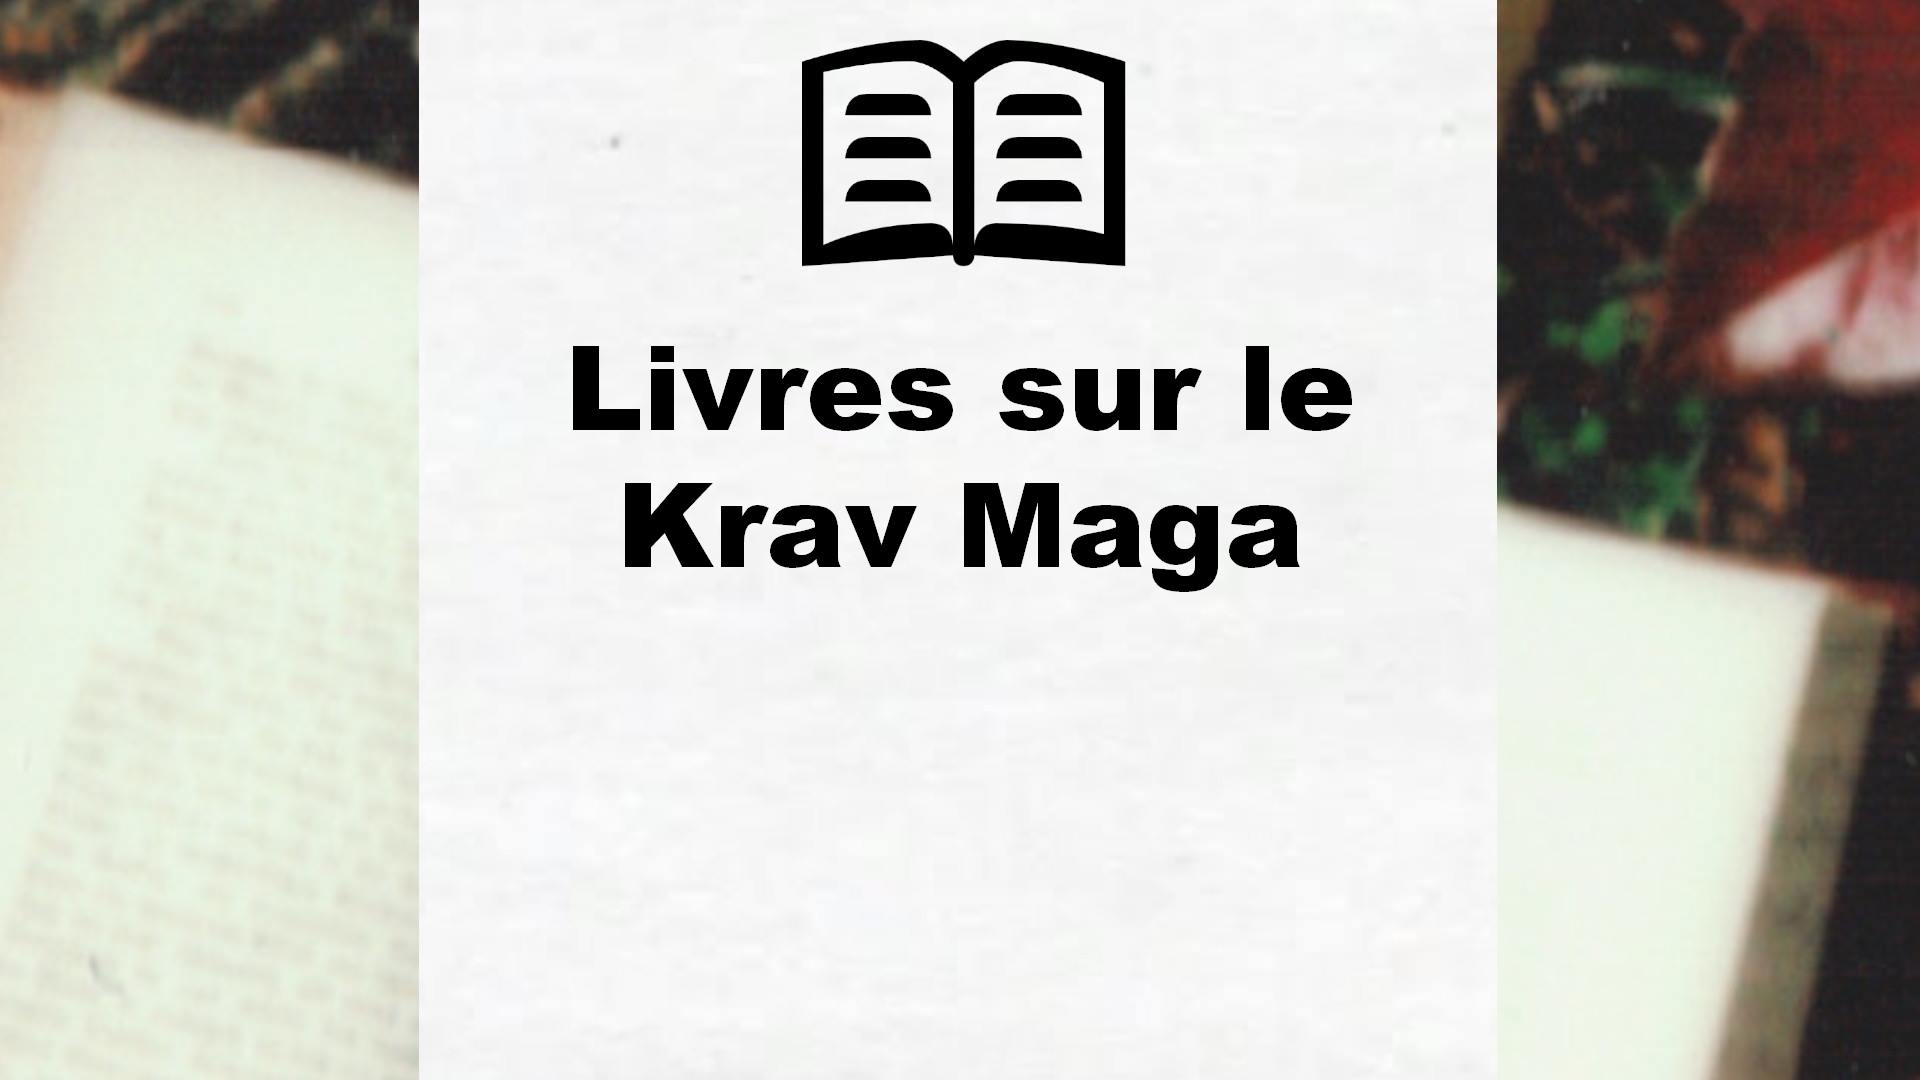 Livres sur le Krav Maga